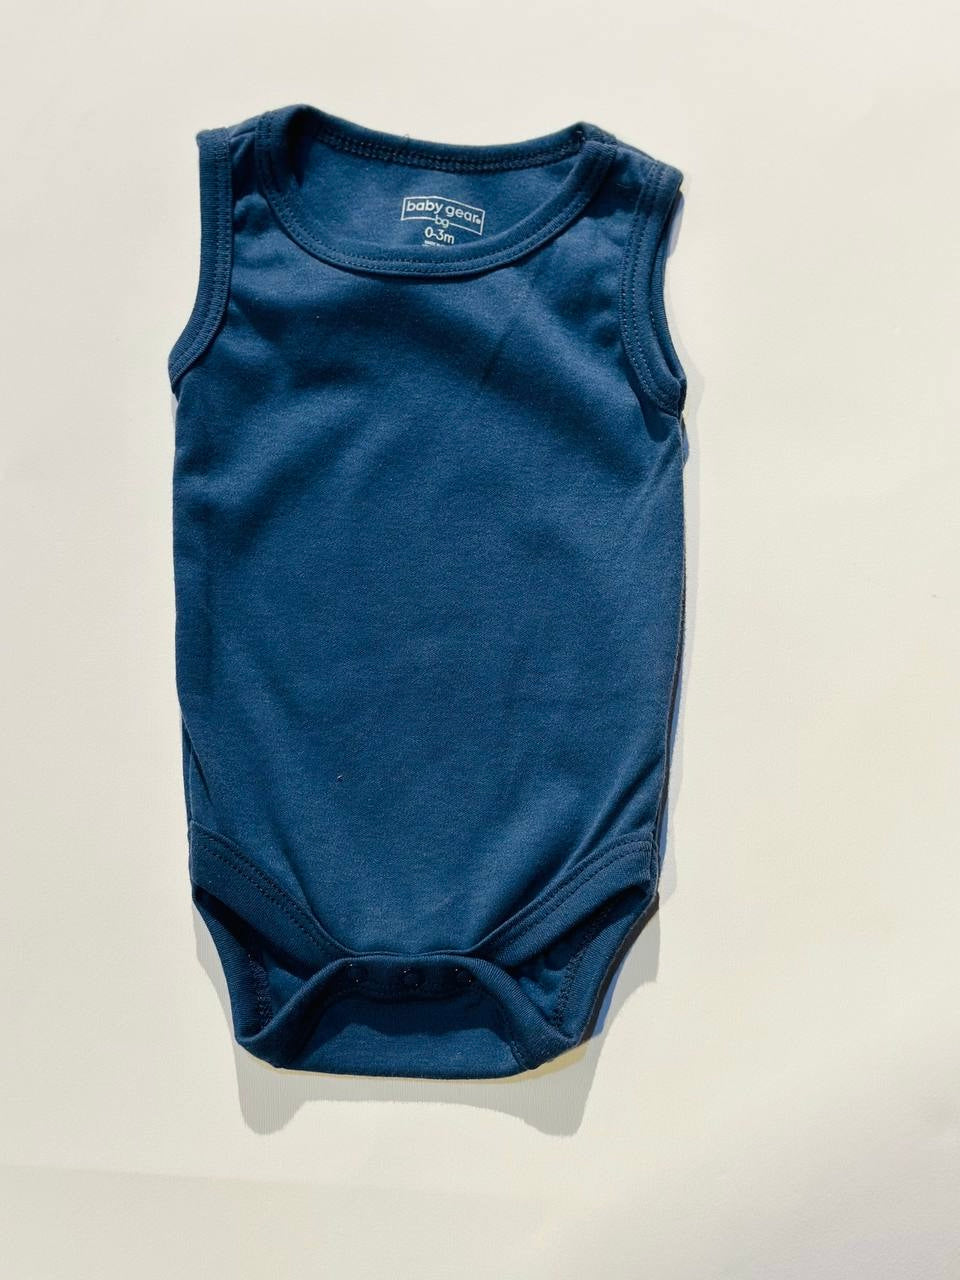 Baby gear bodysuits